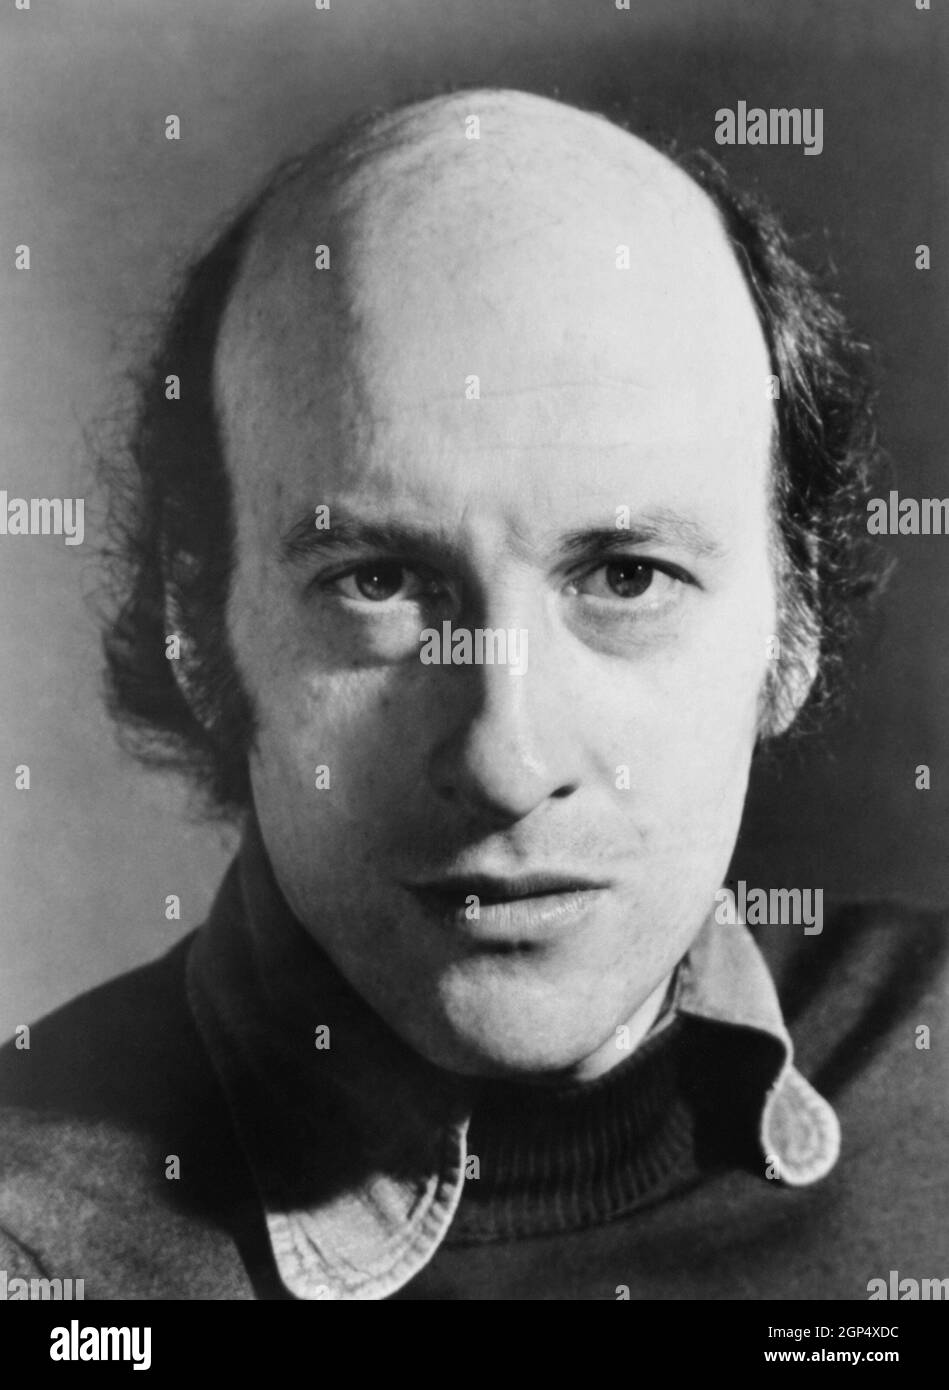 THE RITZ, director Richard Lester, 1976 Stock Photo - Alamy